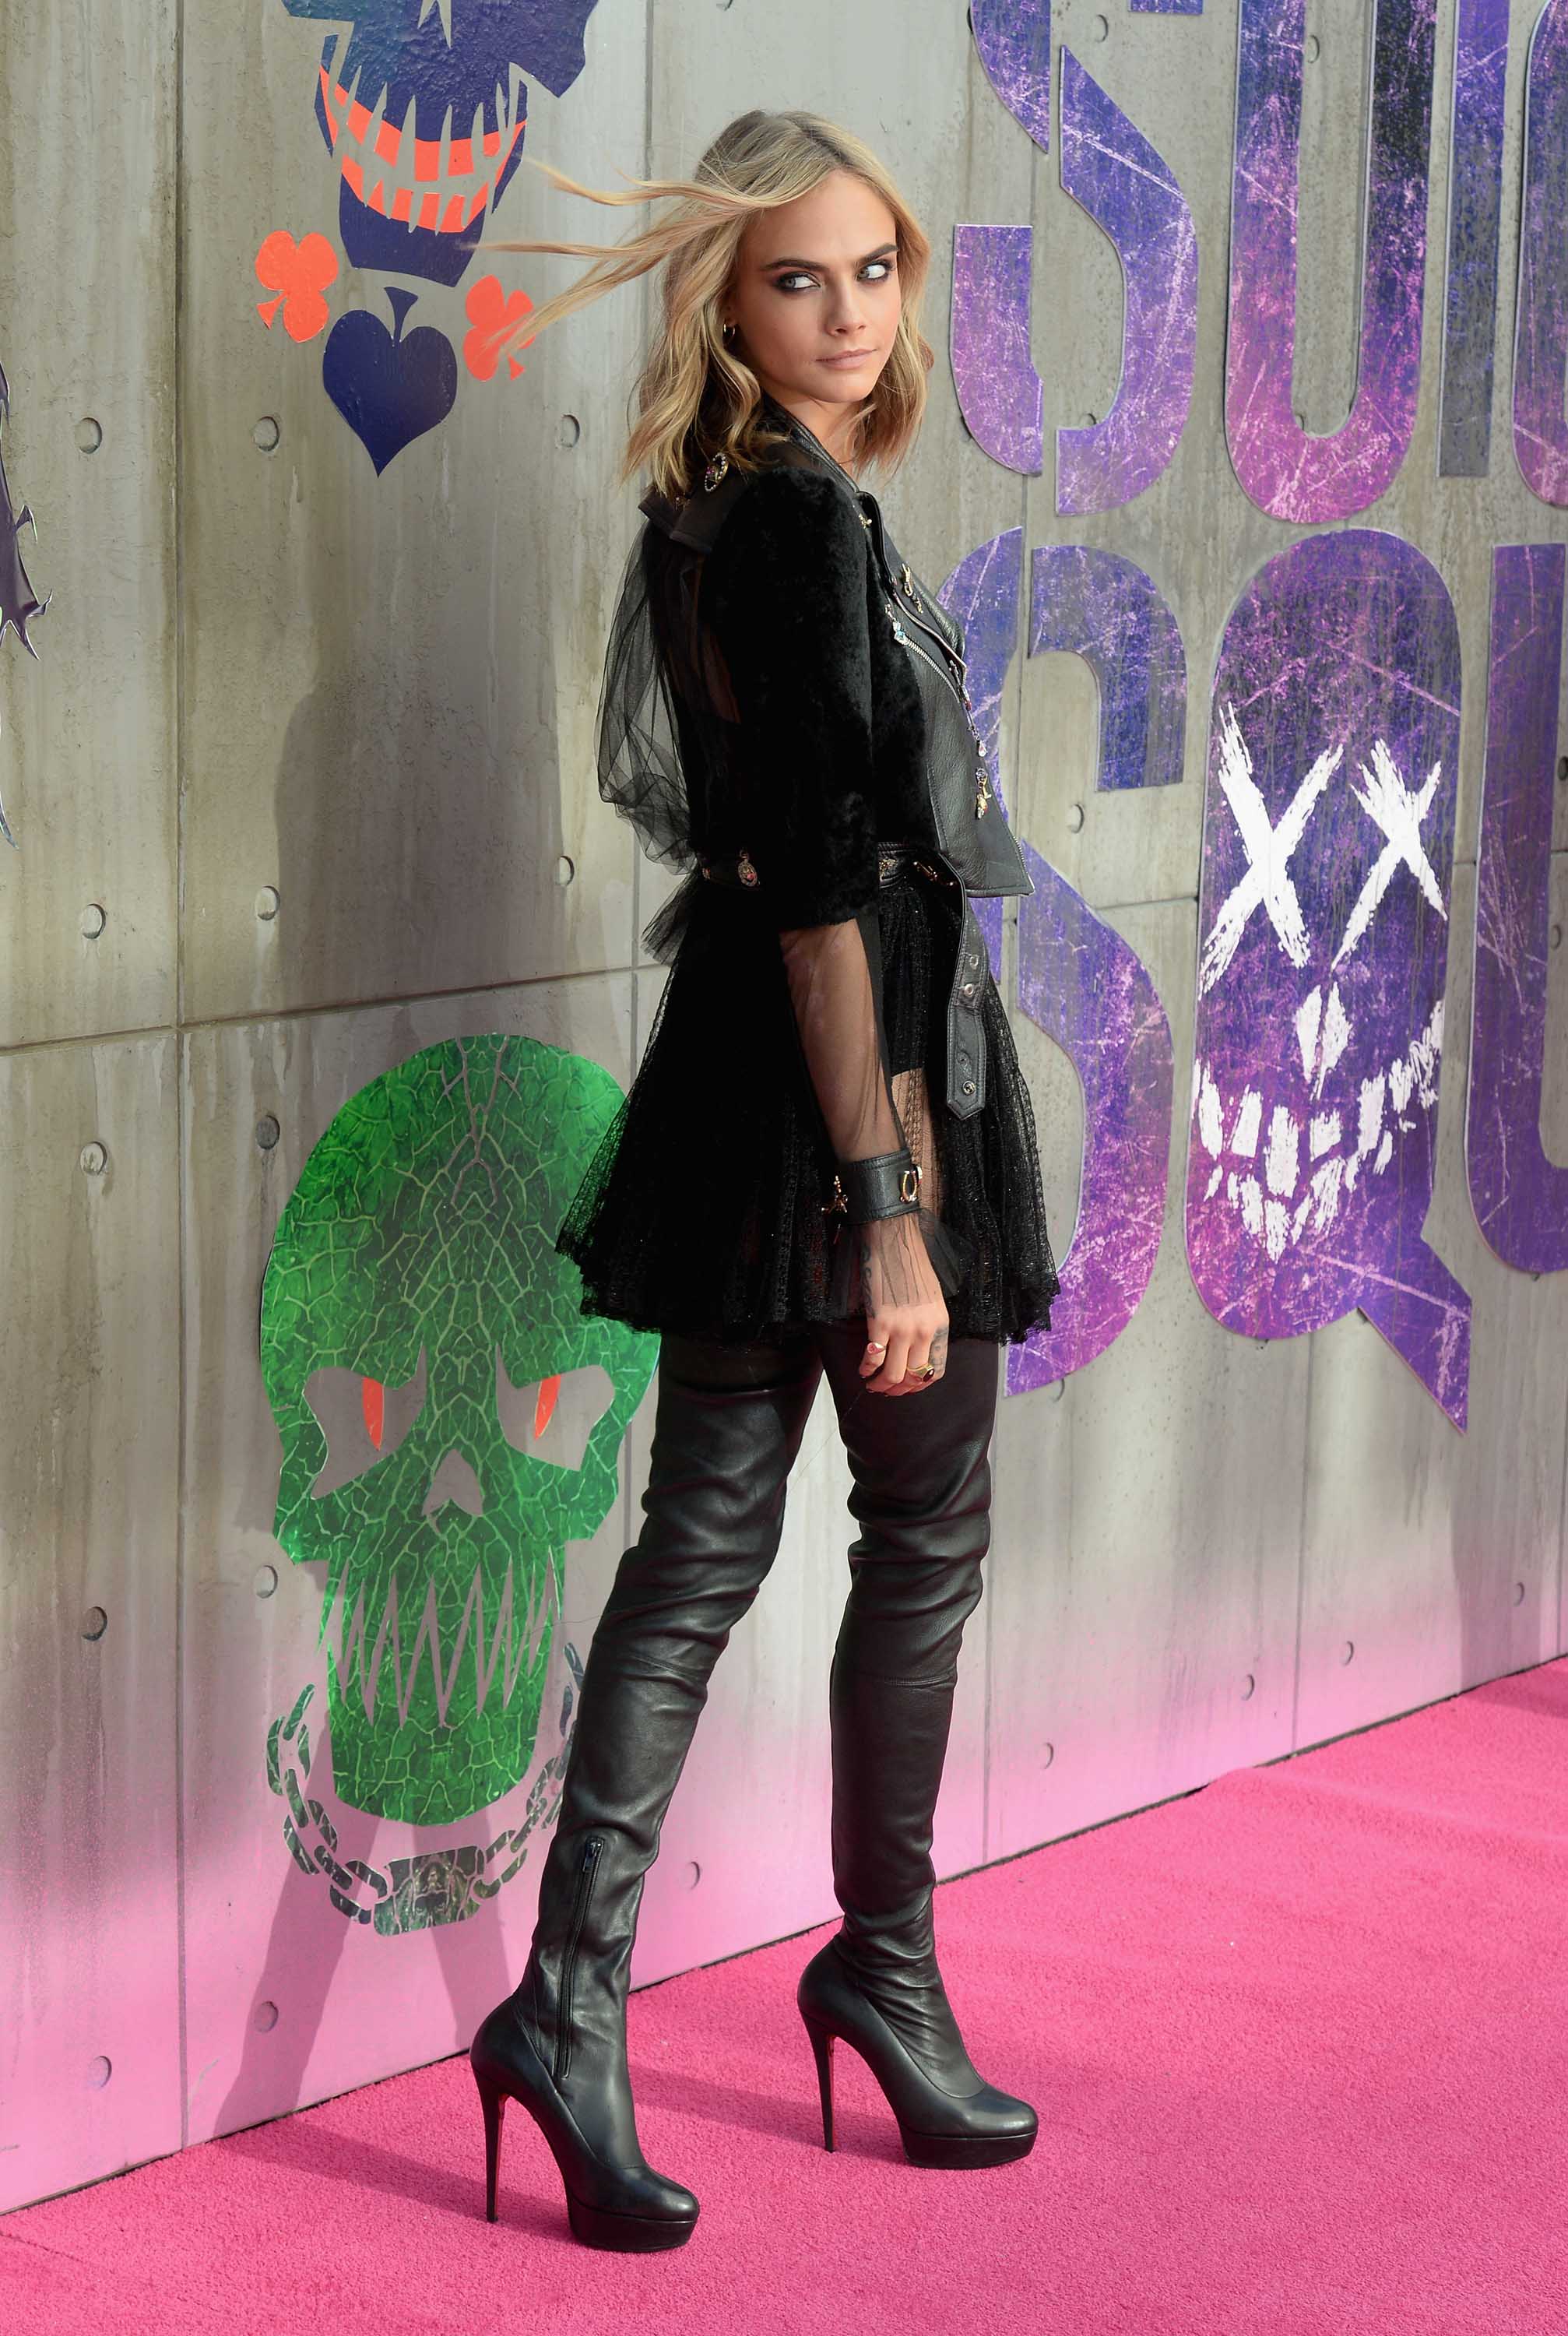 Cara Delevingne attends the Suicide Squad European Premiere